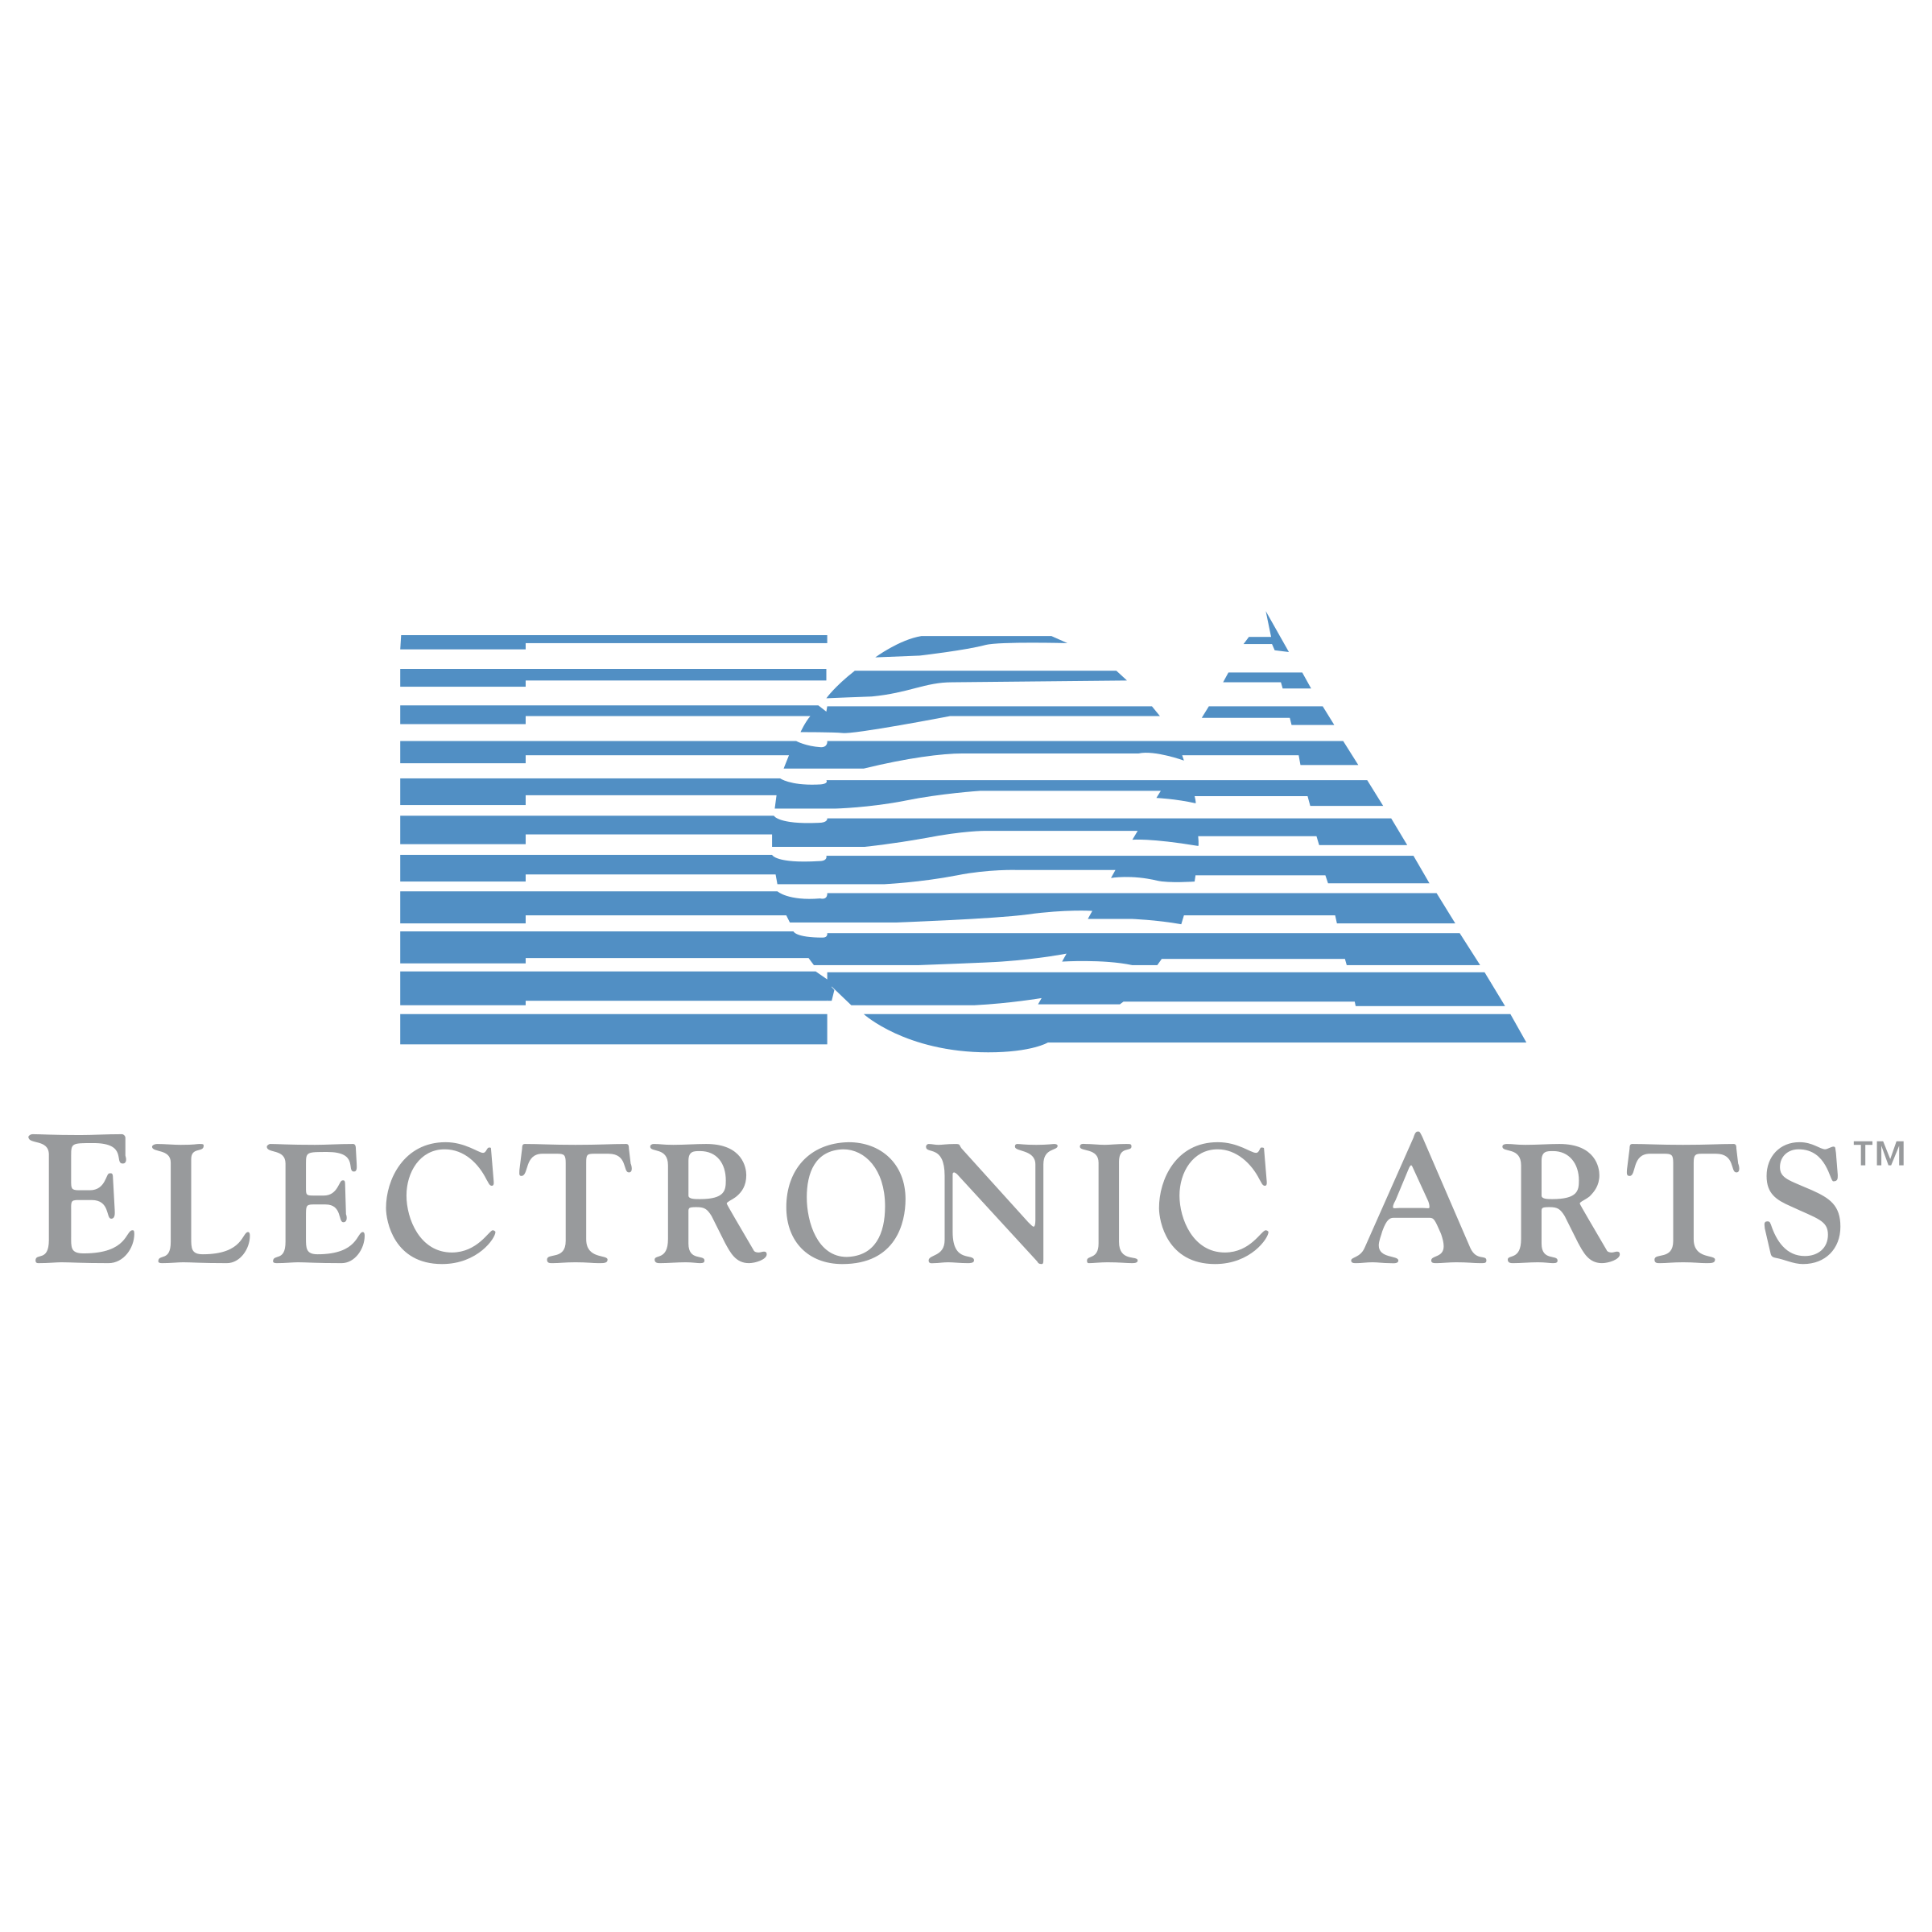 Electronic Arts Logo - Electronic Arts Logo PNG Transparent & SVG Vector